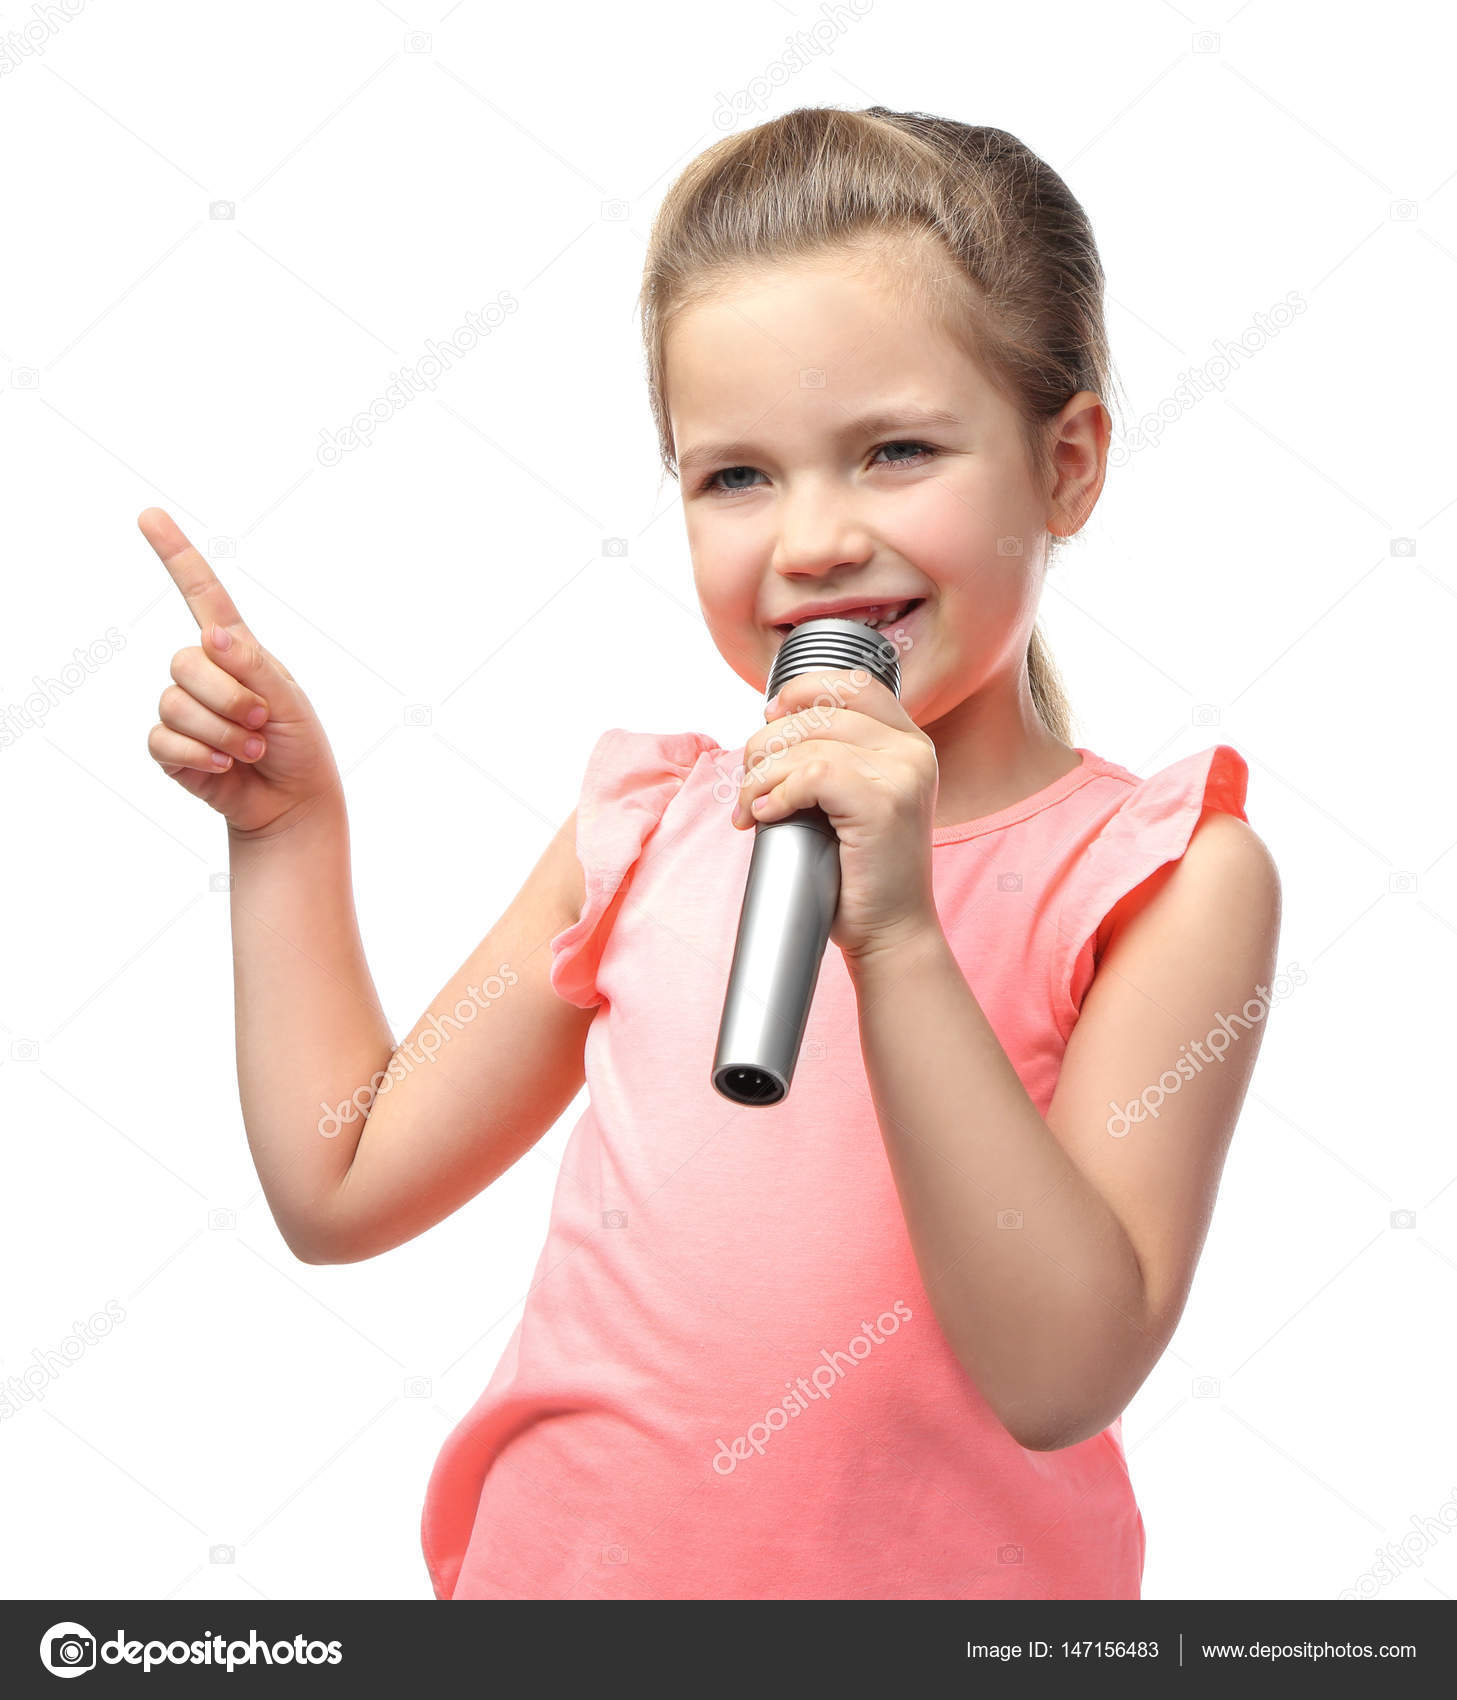 https://st3.depositphotos.com/1177973/14715/i/1600/depositphotos_147156483-stock-photo-cute-little-girl-with-microphone.jpg